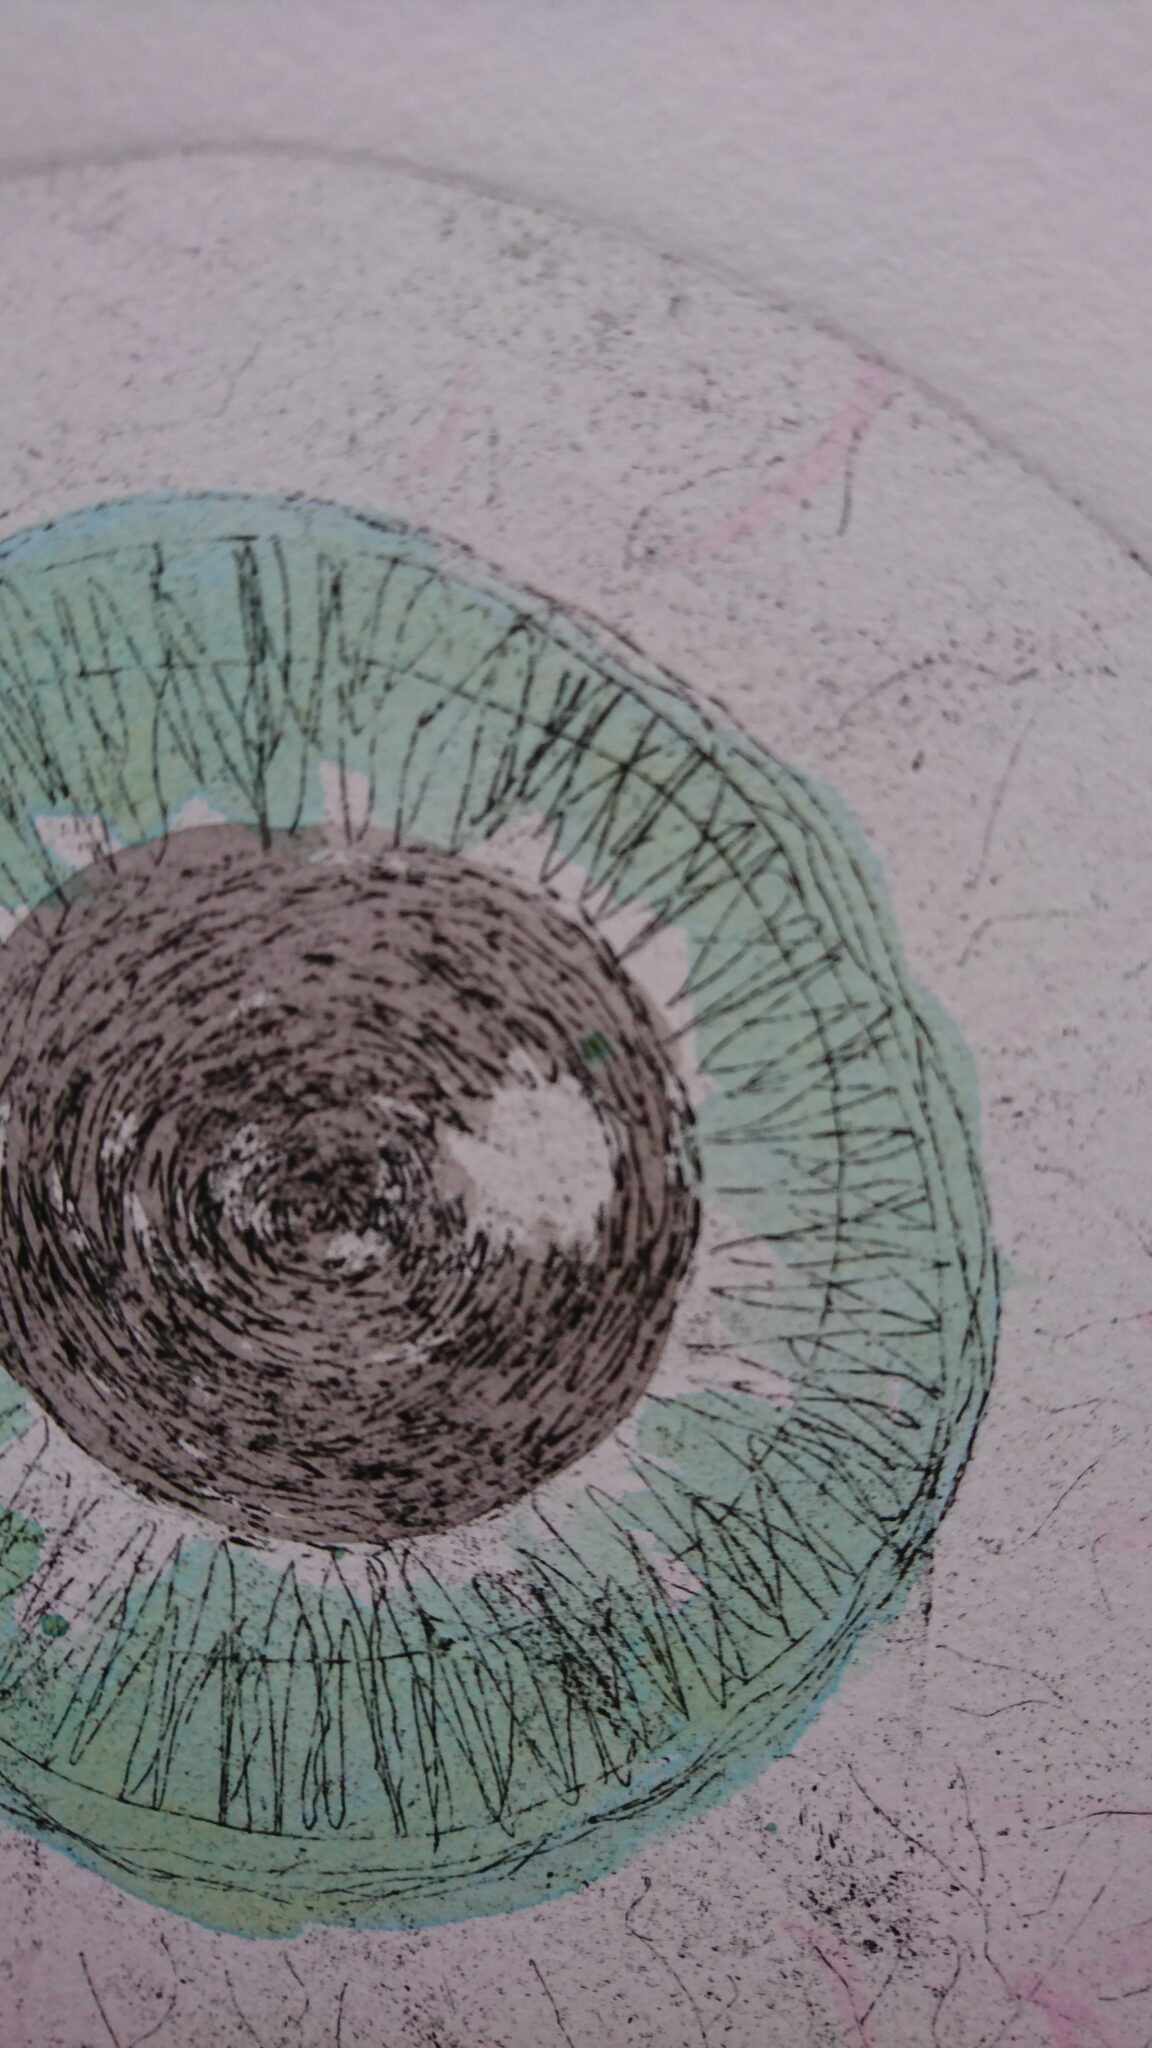 close up showing lines of etching on Aye eyeball (green iris)